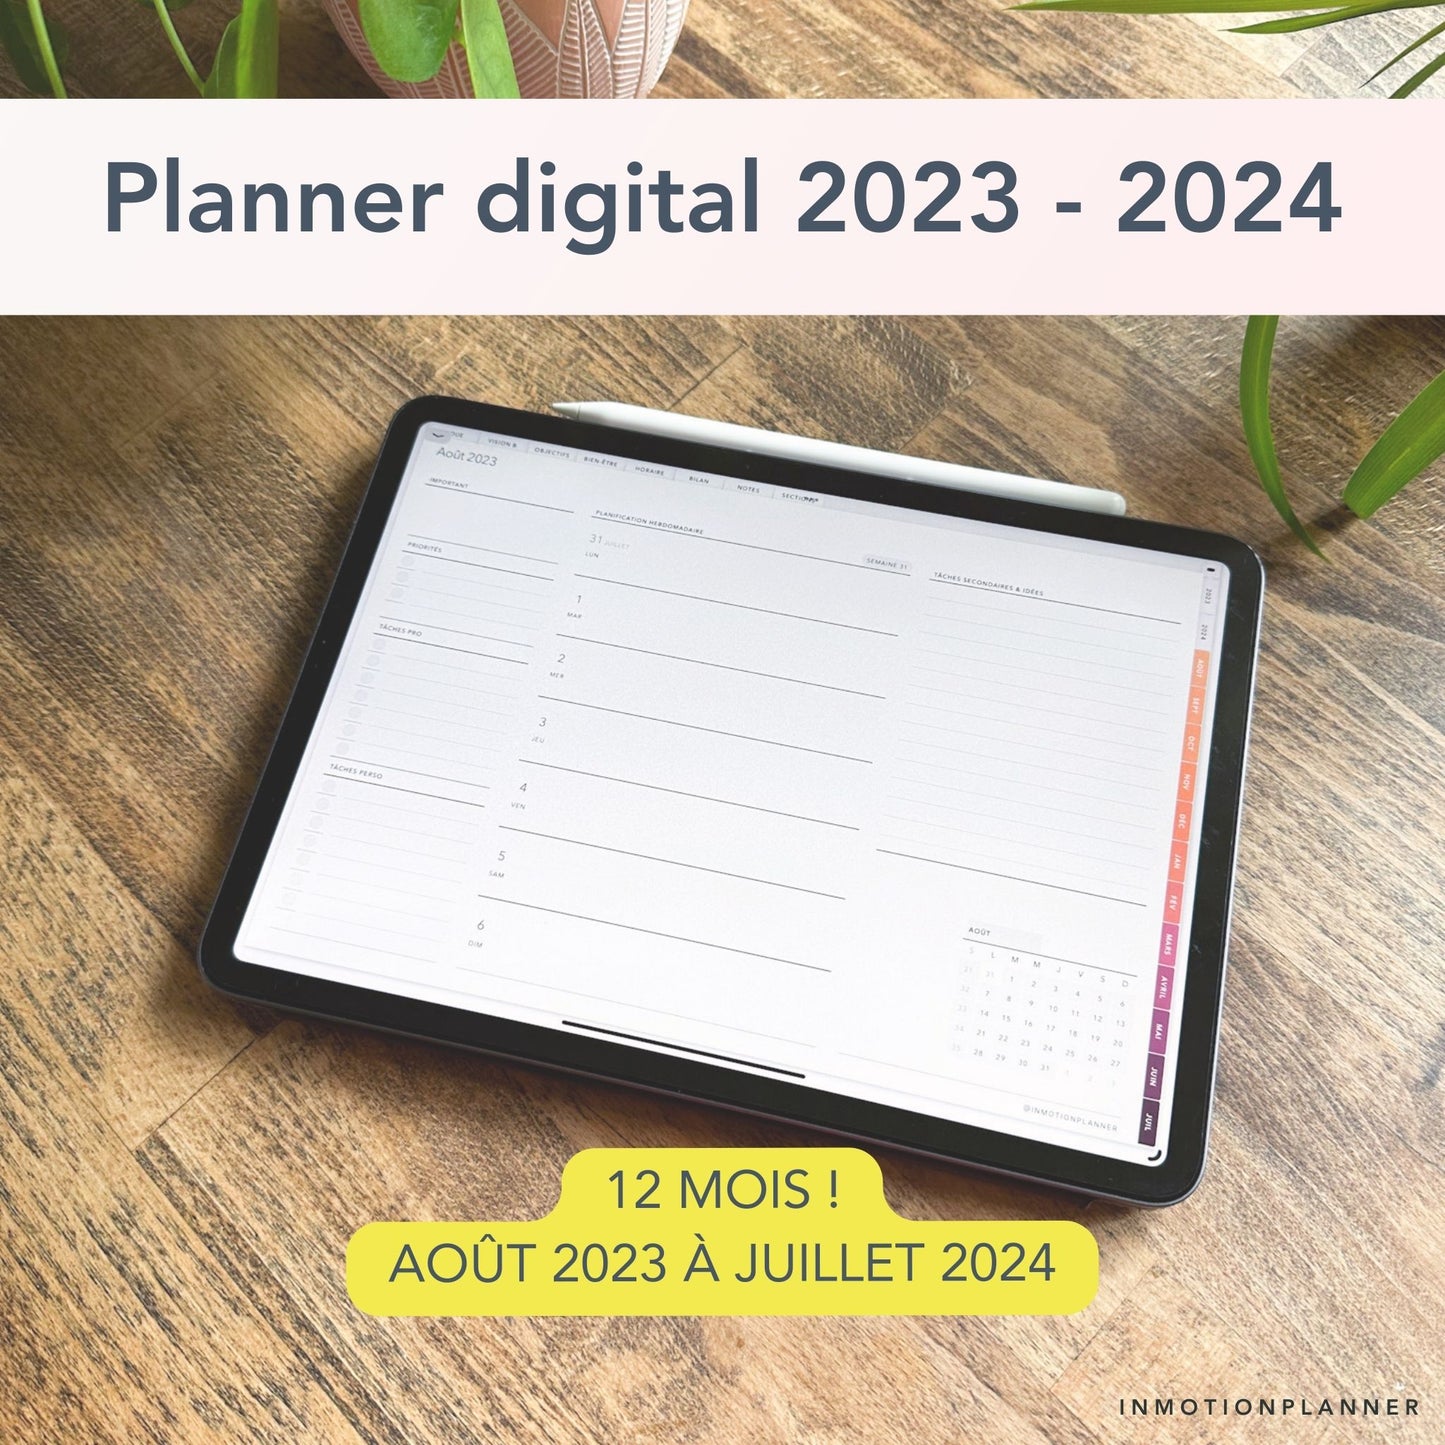 2023 - 2024 Planner digital horizontal